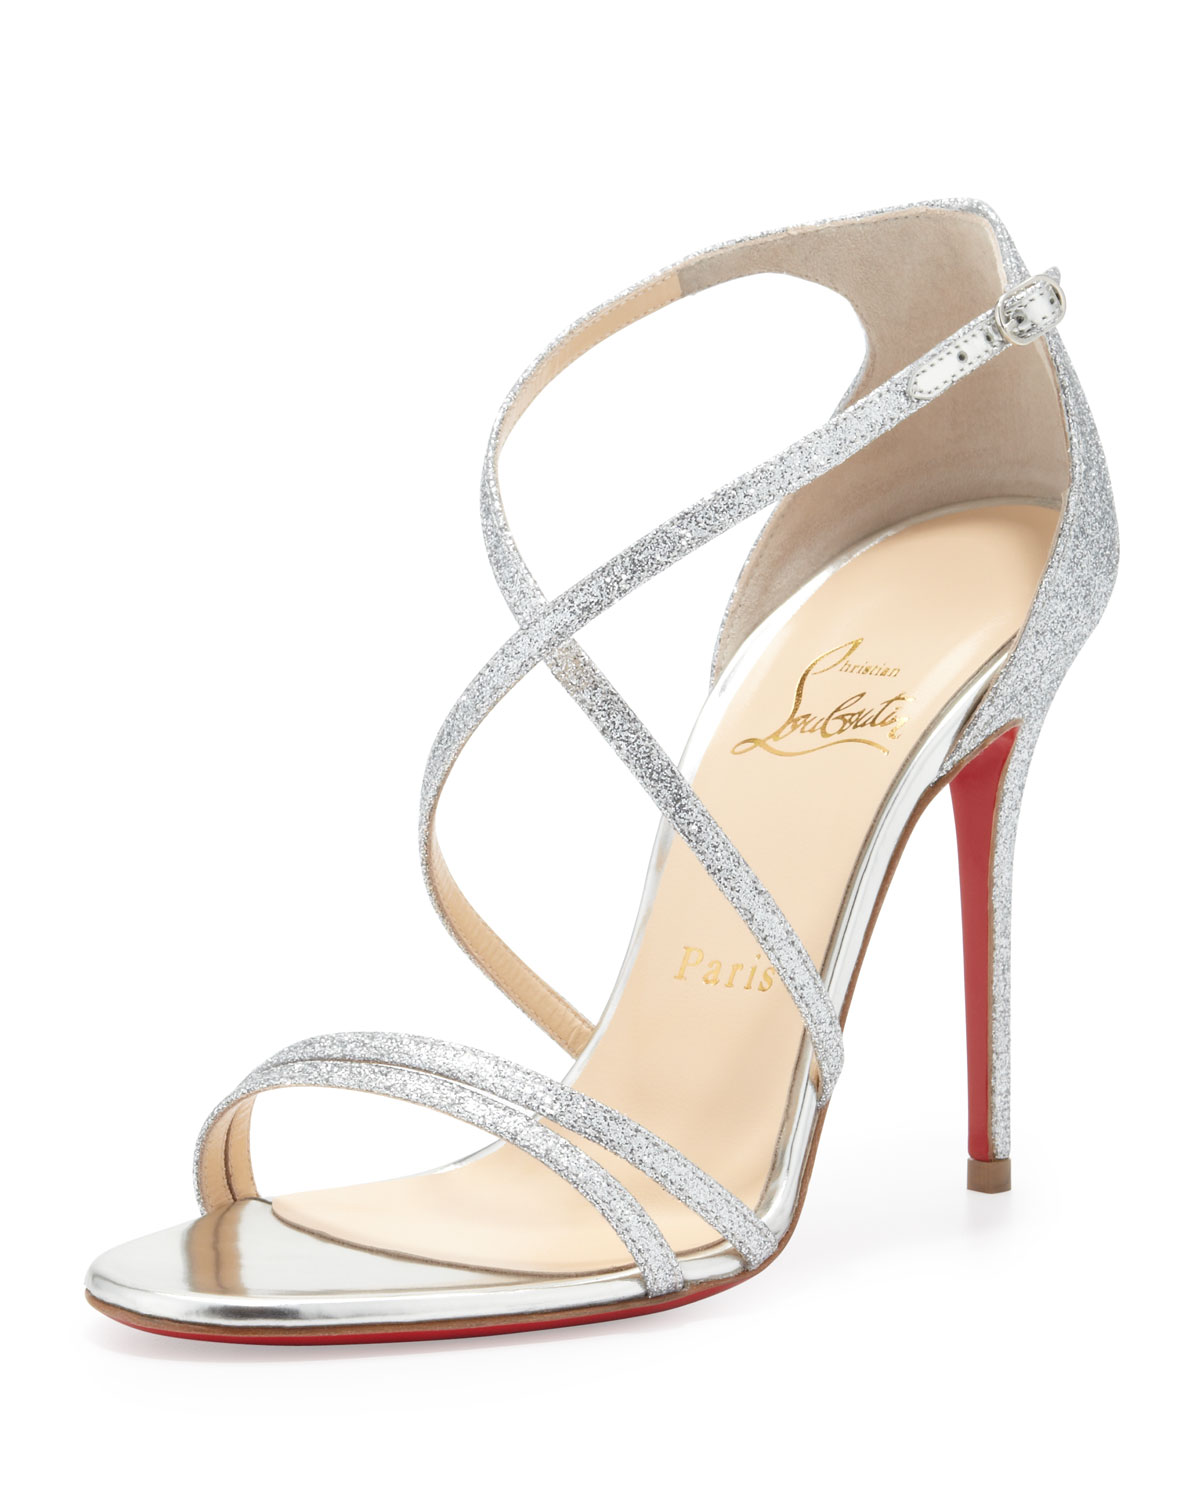 cheap louis vuitton mens shoes - Christian louboutin Gwynitta Glitter Opentoed Sandal Silver in ...